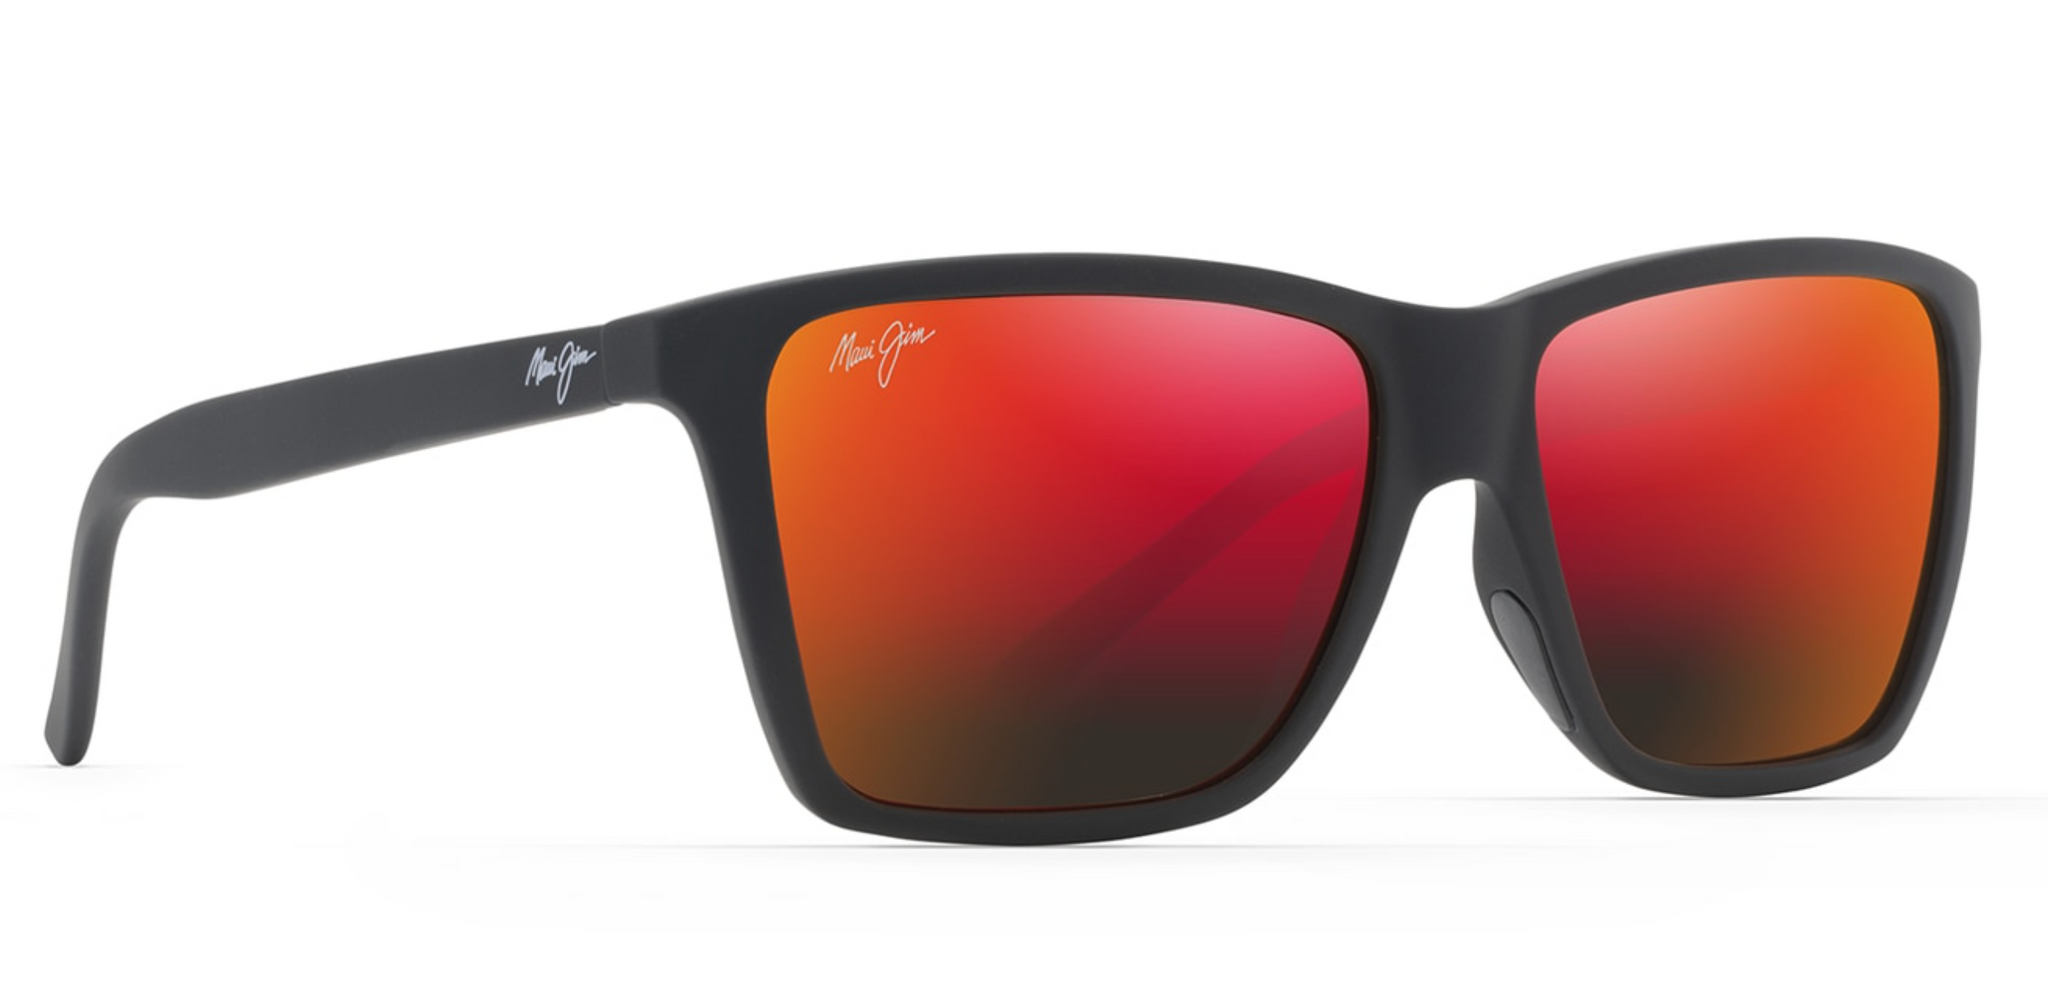 Maui Jim Cruzem 864 Sunglasses: H864-10, RM864-02A, 864-02, B864-03 -  Flight Sunglasses